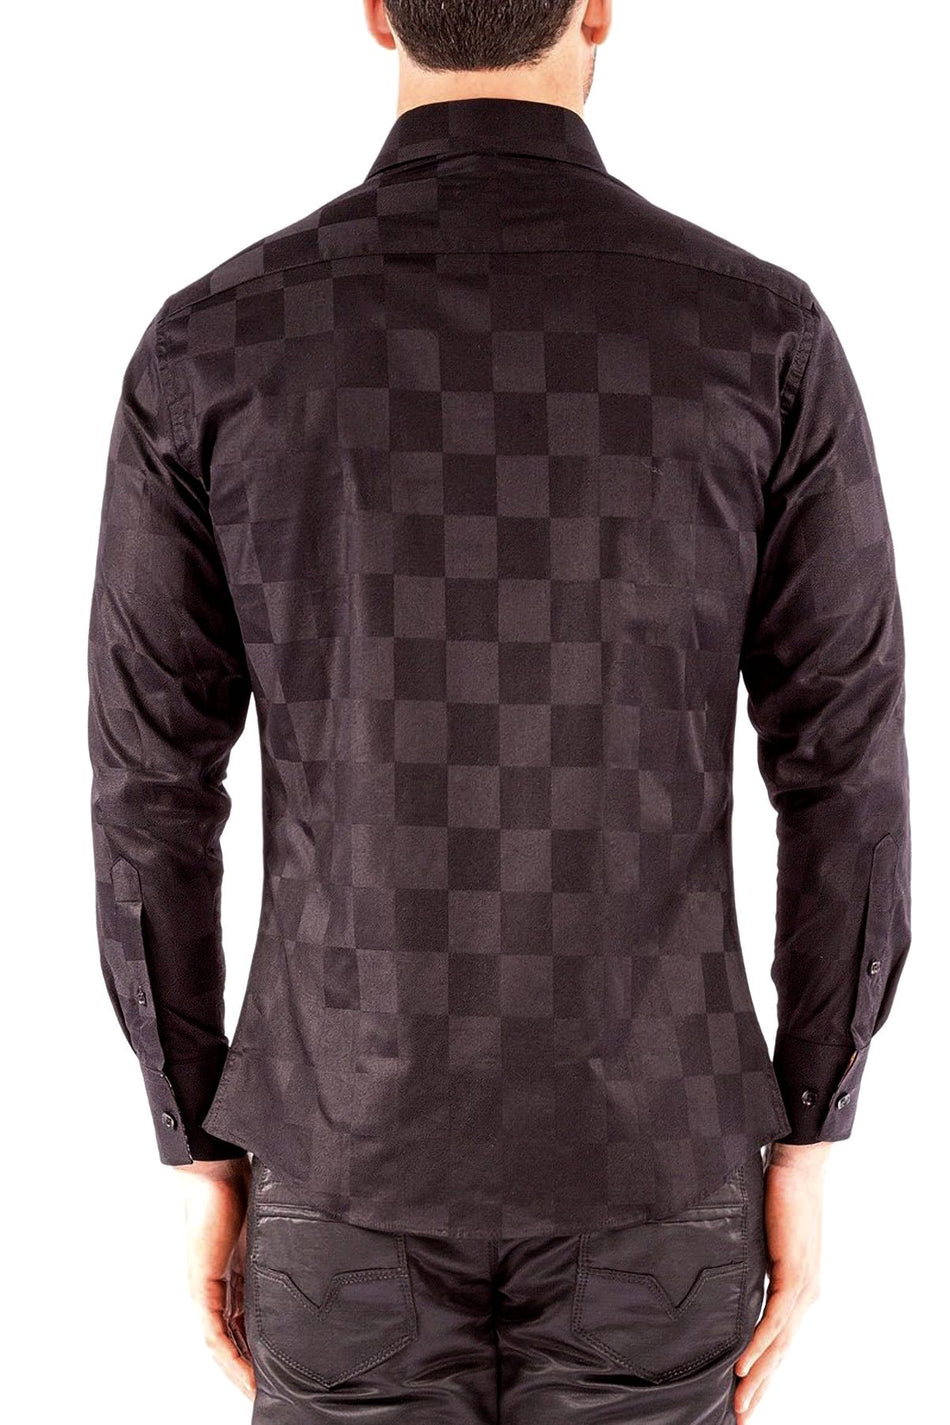 Checkered Texture Solid Black Button Up Long Sleeve Dress Shirt